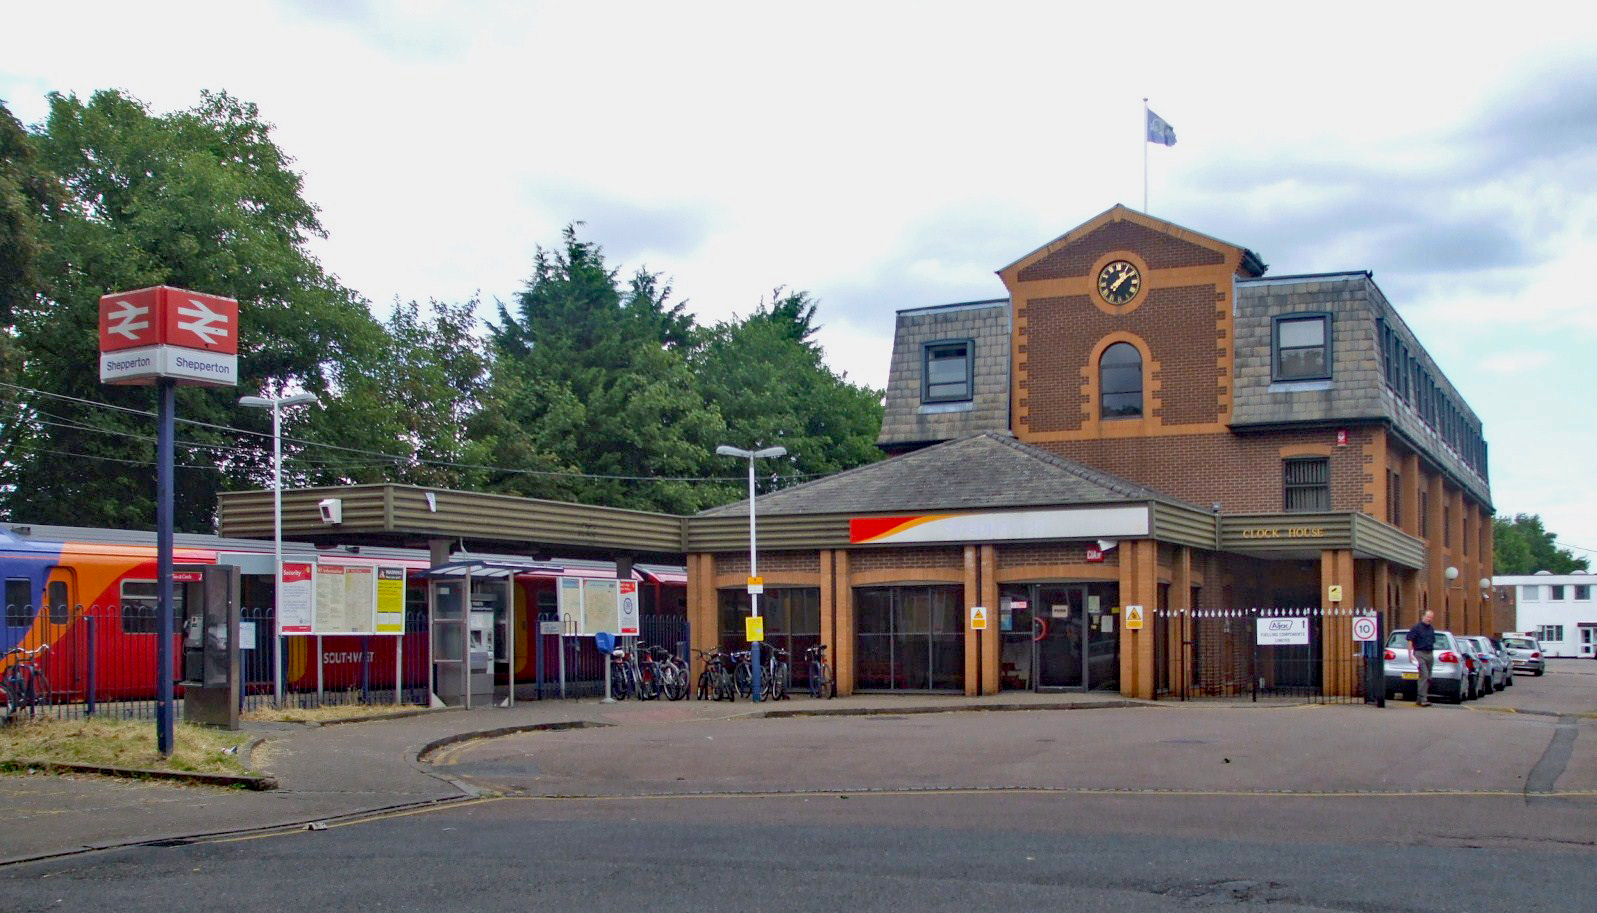 Shepperton railway station